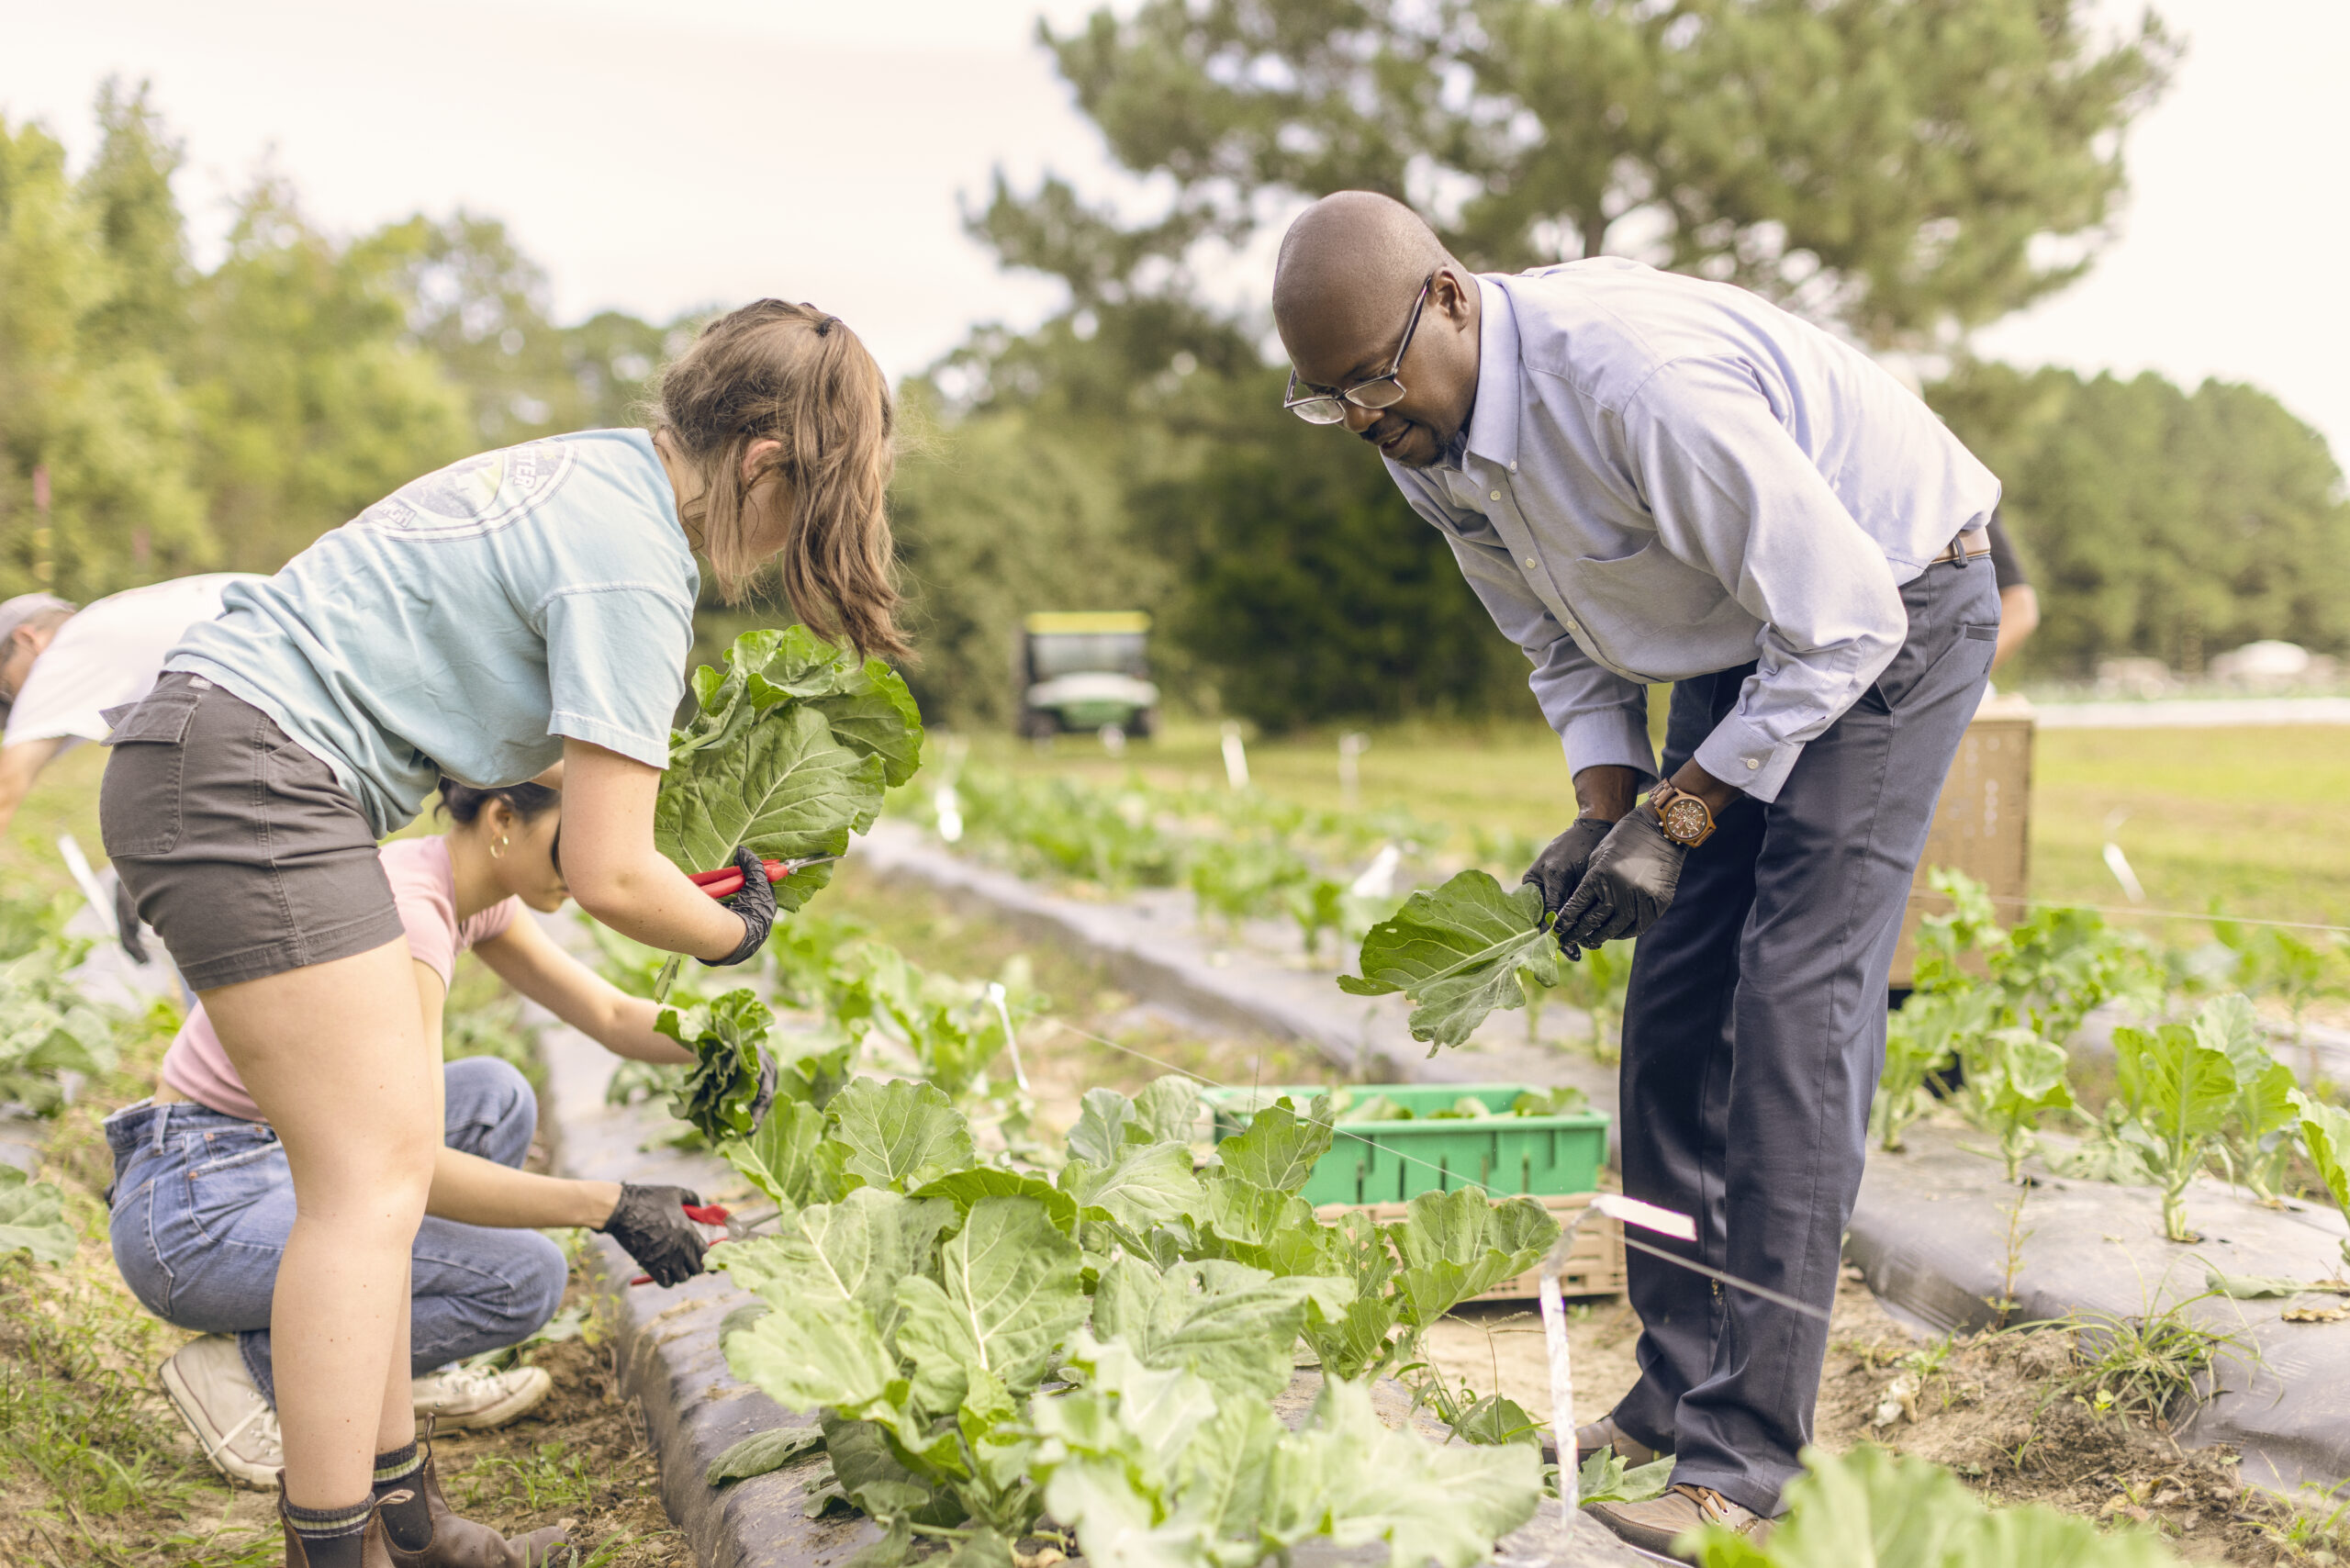 Four volunteers harvest lettuce in a community garden